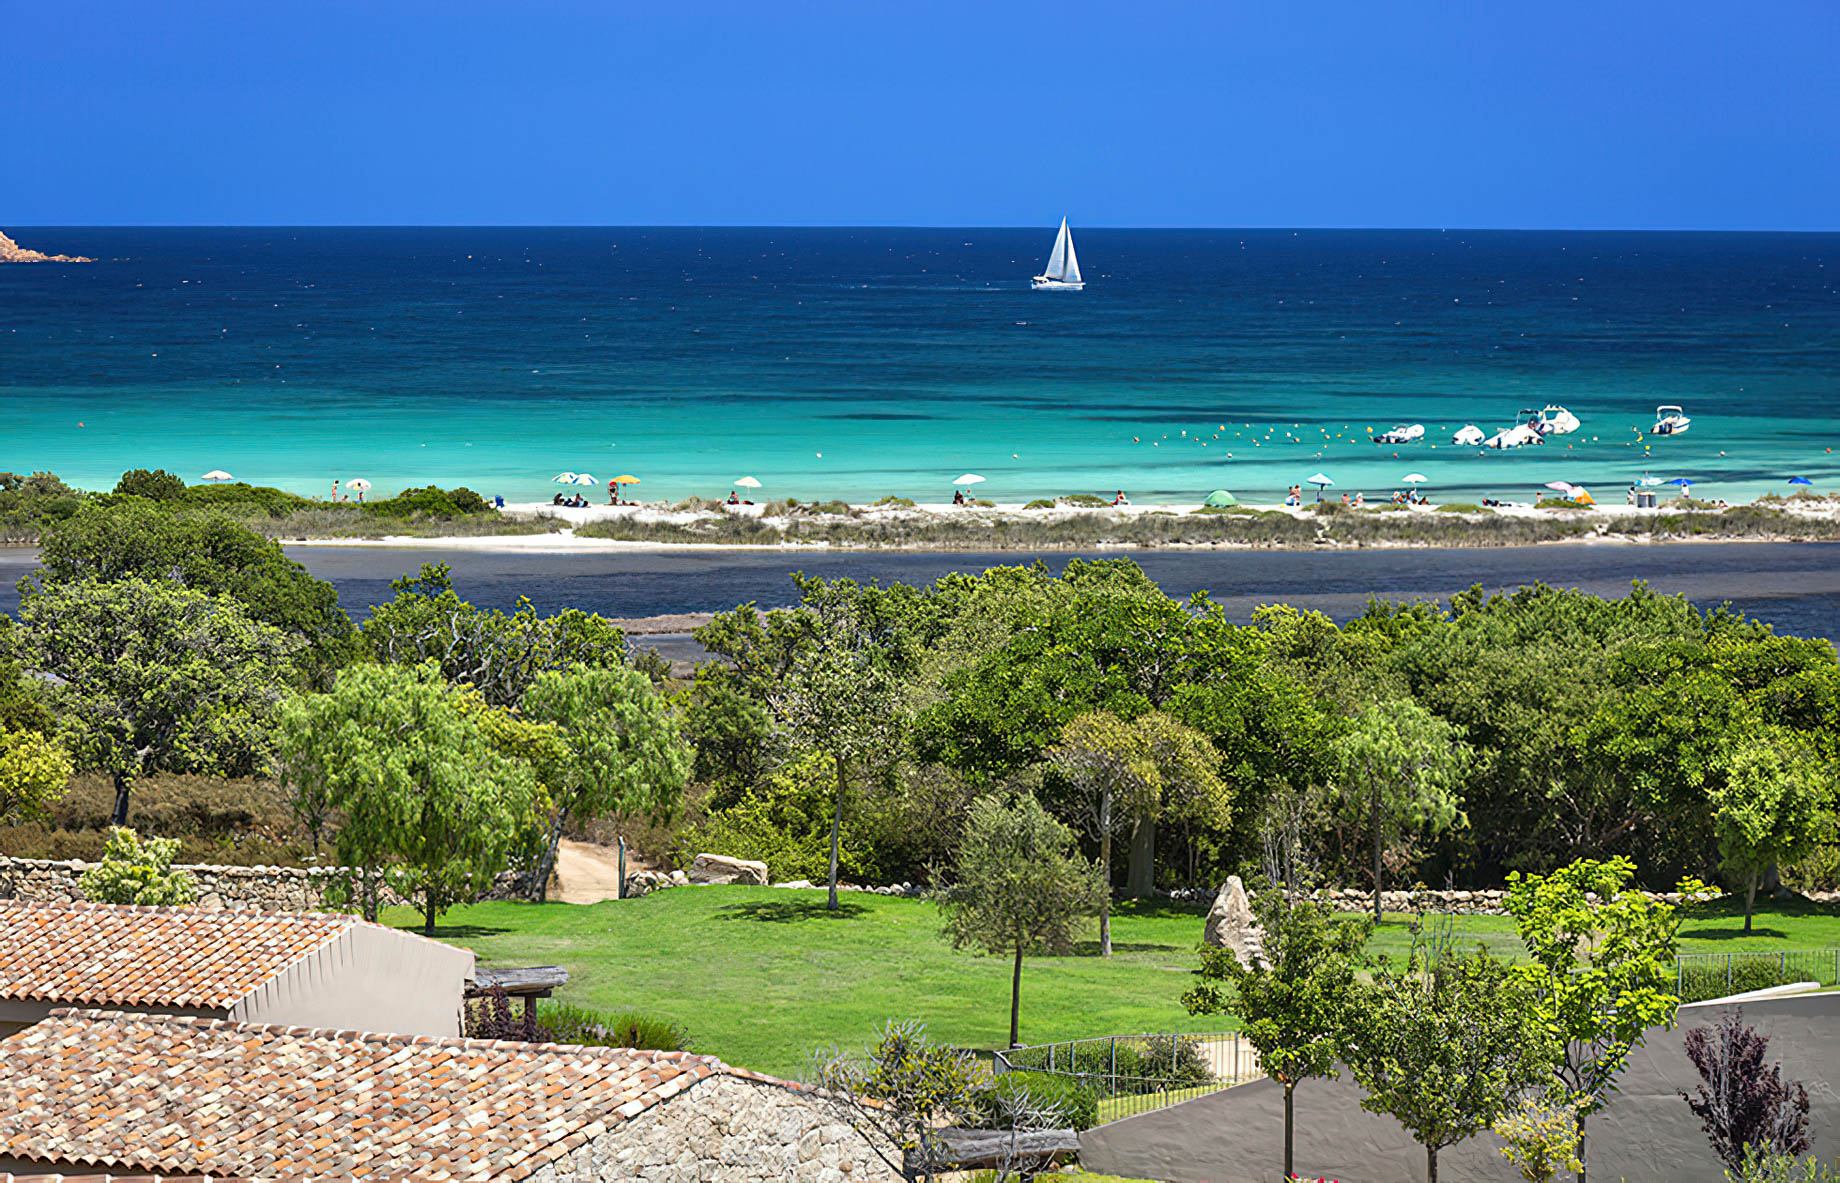 Baglioni Resort Sardinia - San Teodoro, Sardegna, Italy - Resort Beach View